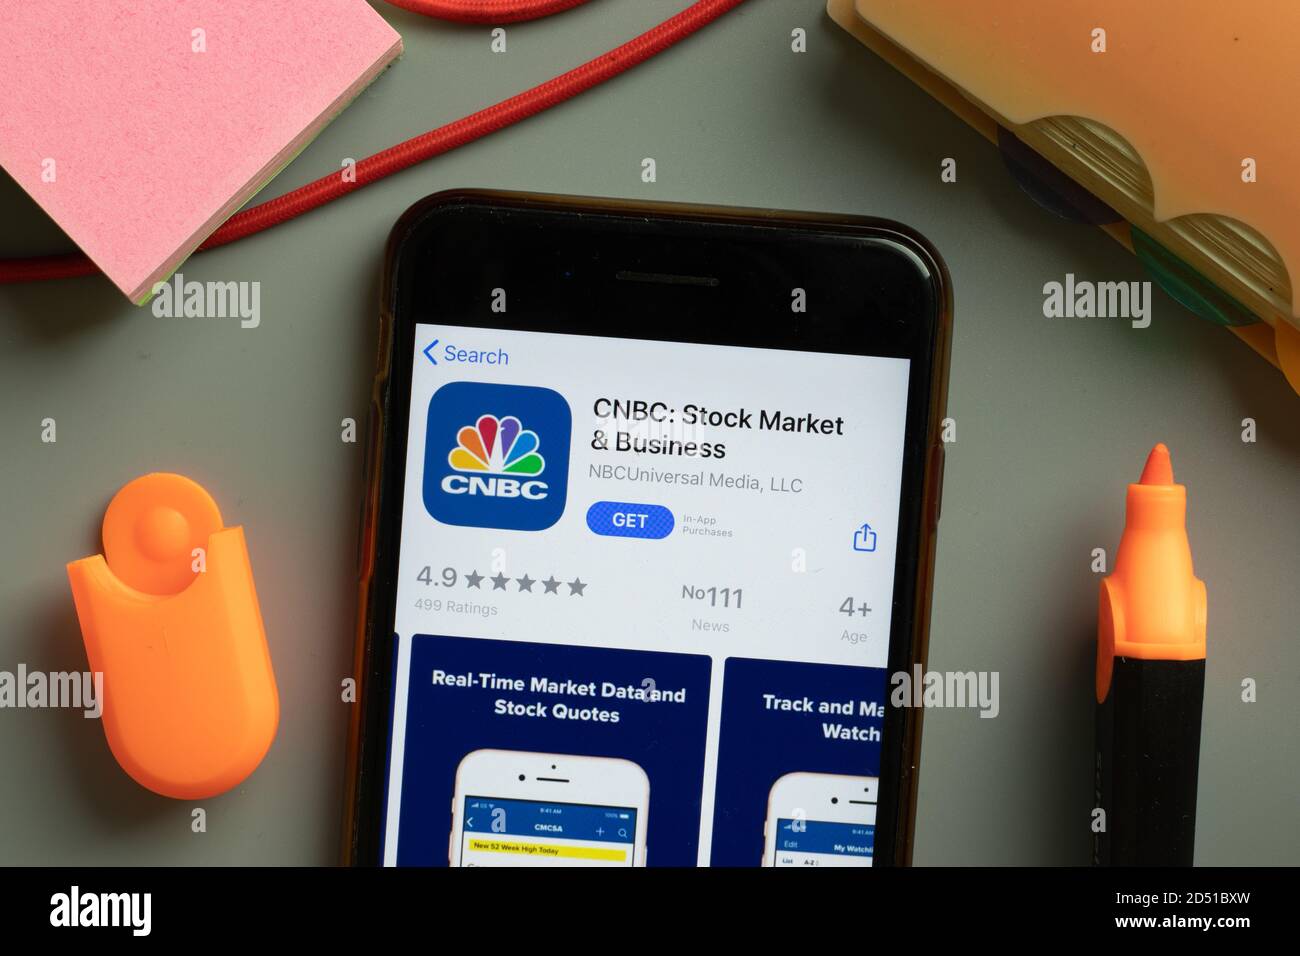 New York, USA - 29. September 2020: CNBC Stock Market und Business Mobile App Logo auf dem Handy-Bildschirm Nahaufnahme, illustrative Editorial Stockfoto